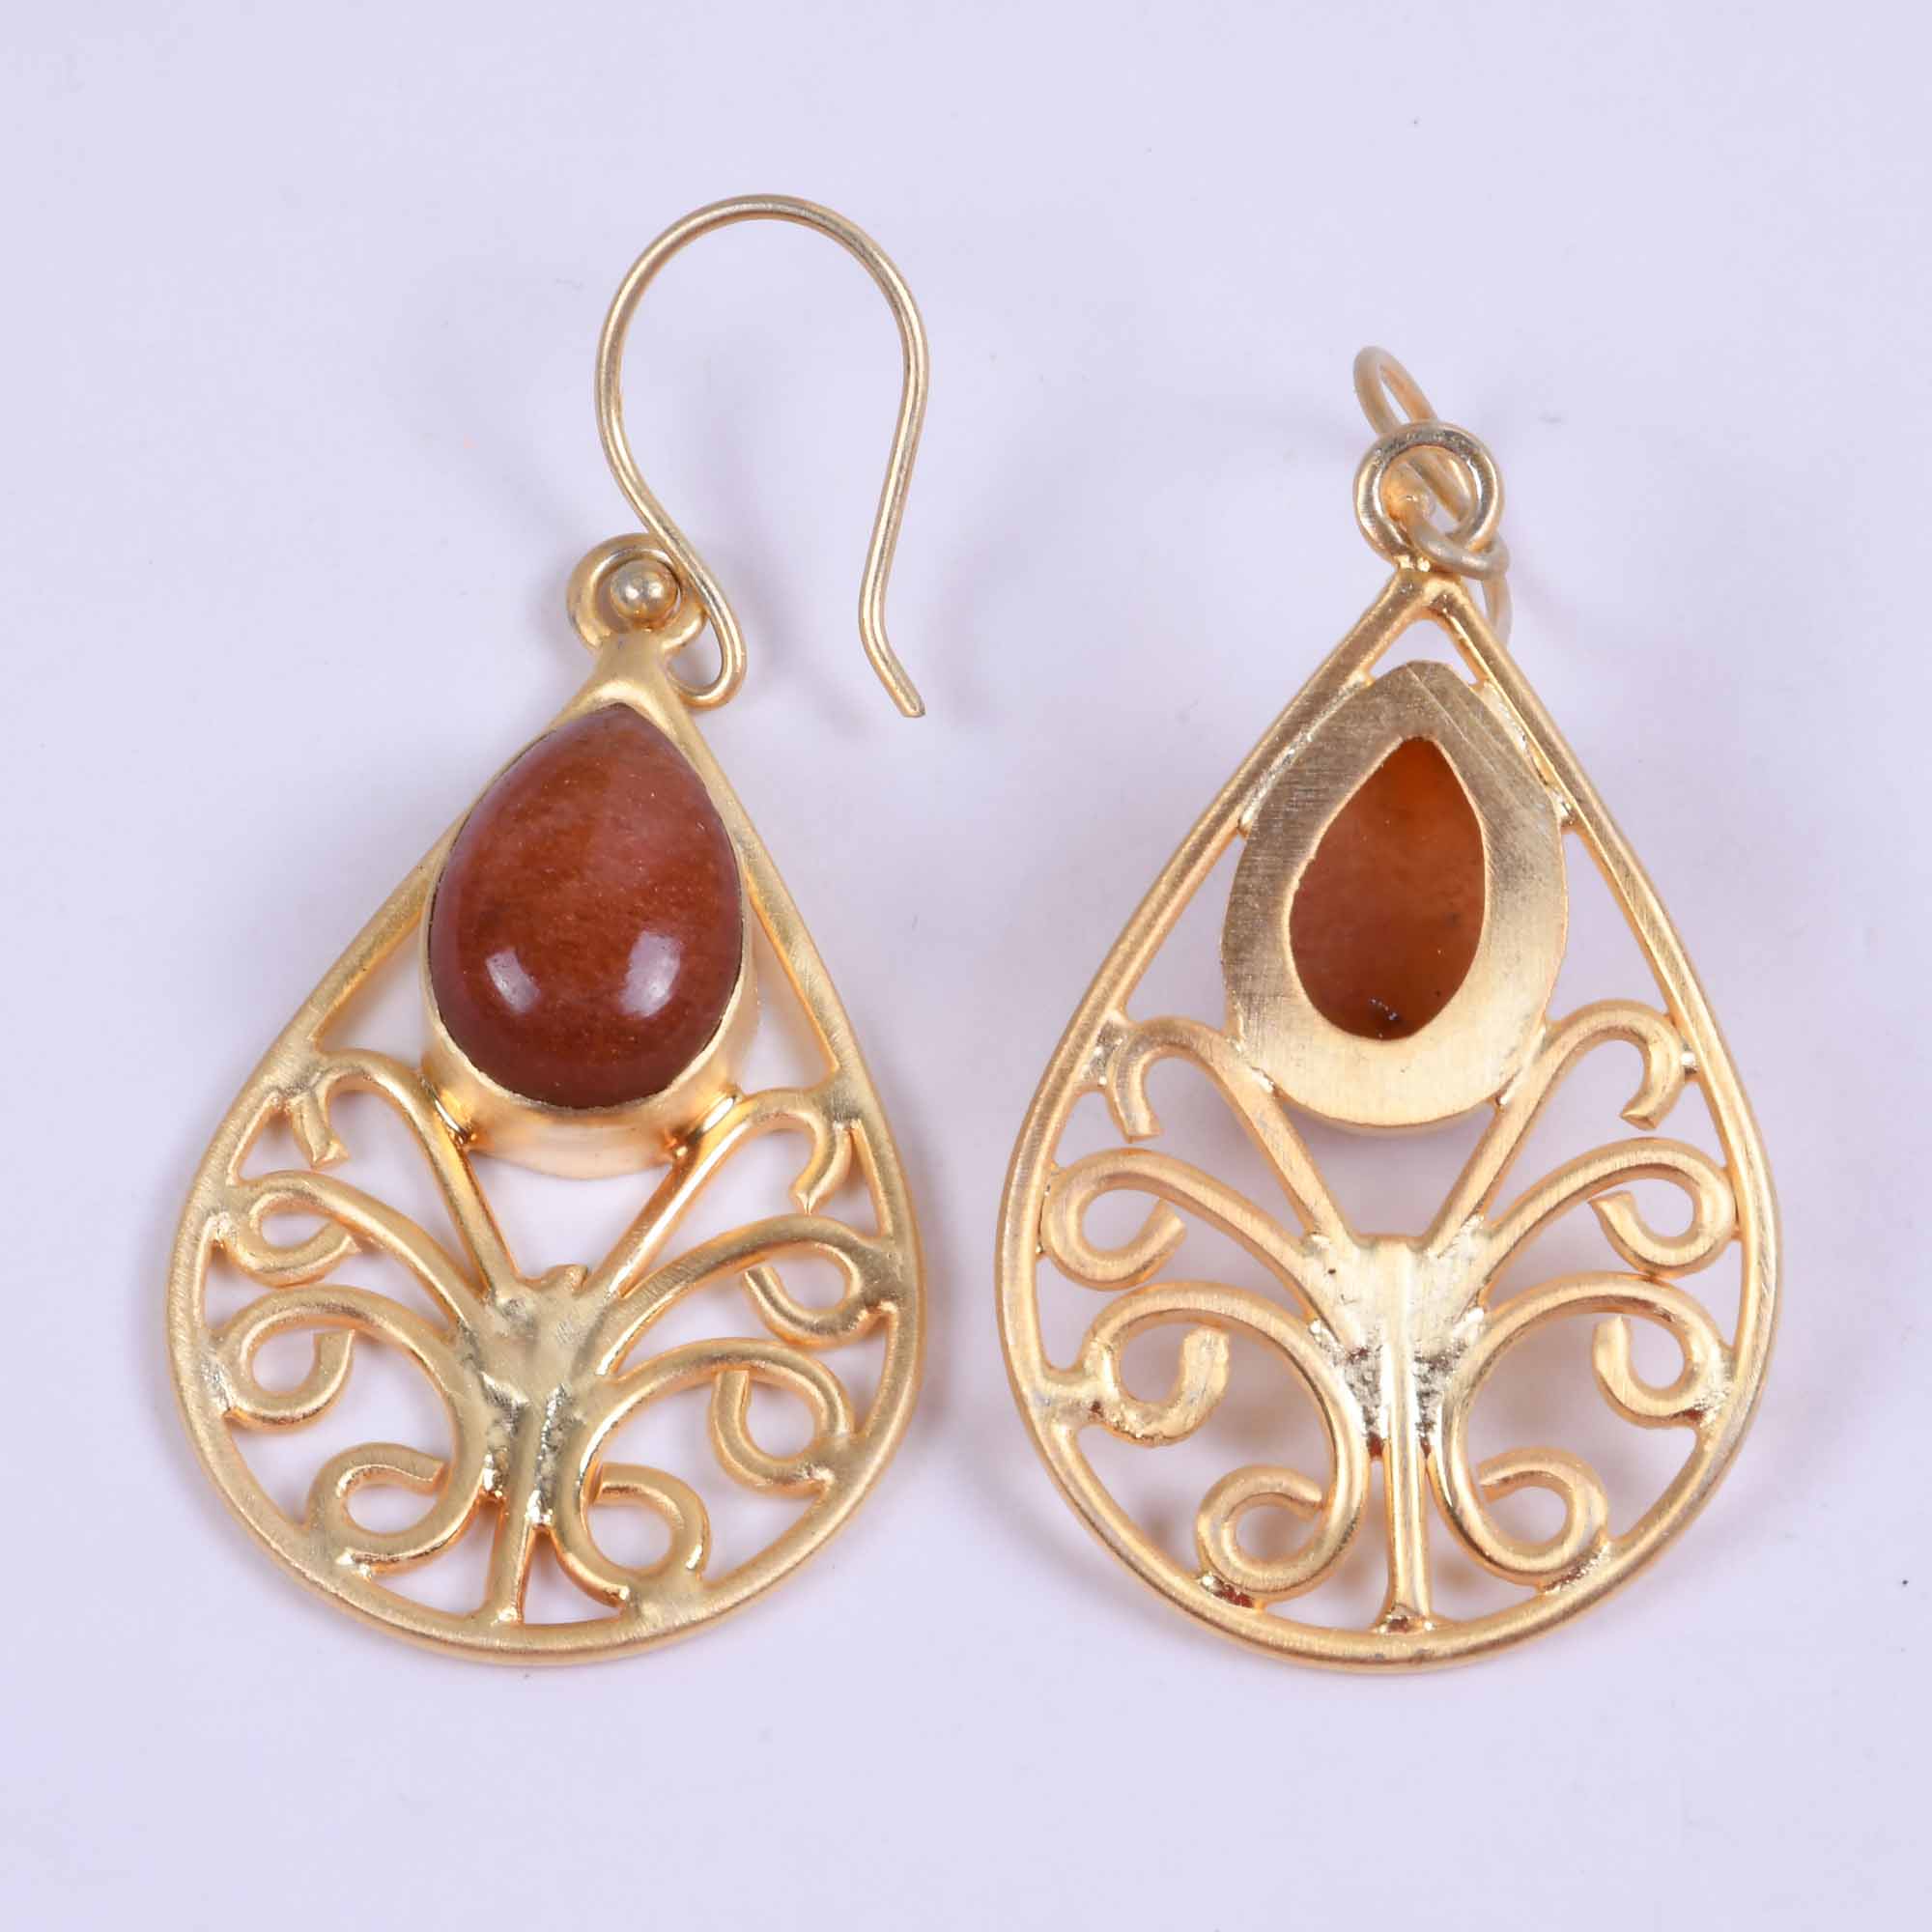 Dinah Textile Earring | Upcycled Earrings | Artisan Made, हैंडमेड इयररिंग,  हाथ से बने इयररिंग - Living Brown Private Limited, Mumbai | ID:  2853304245673